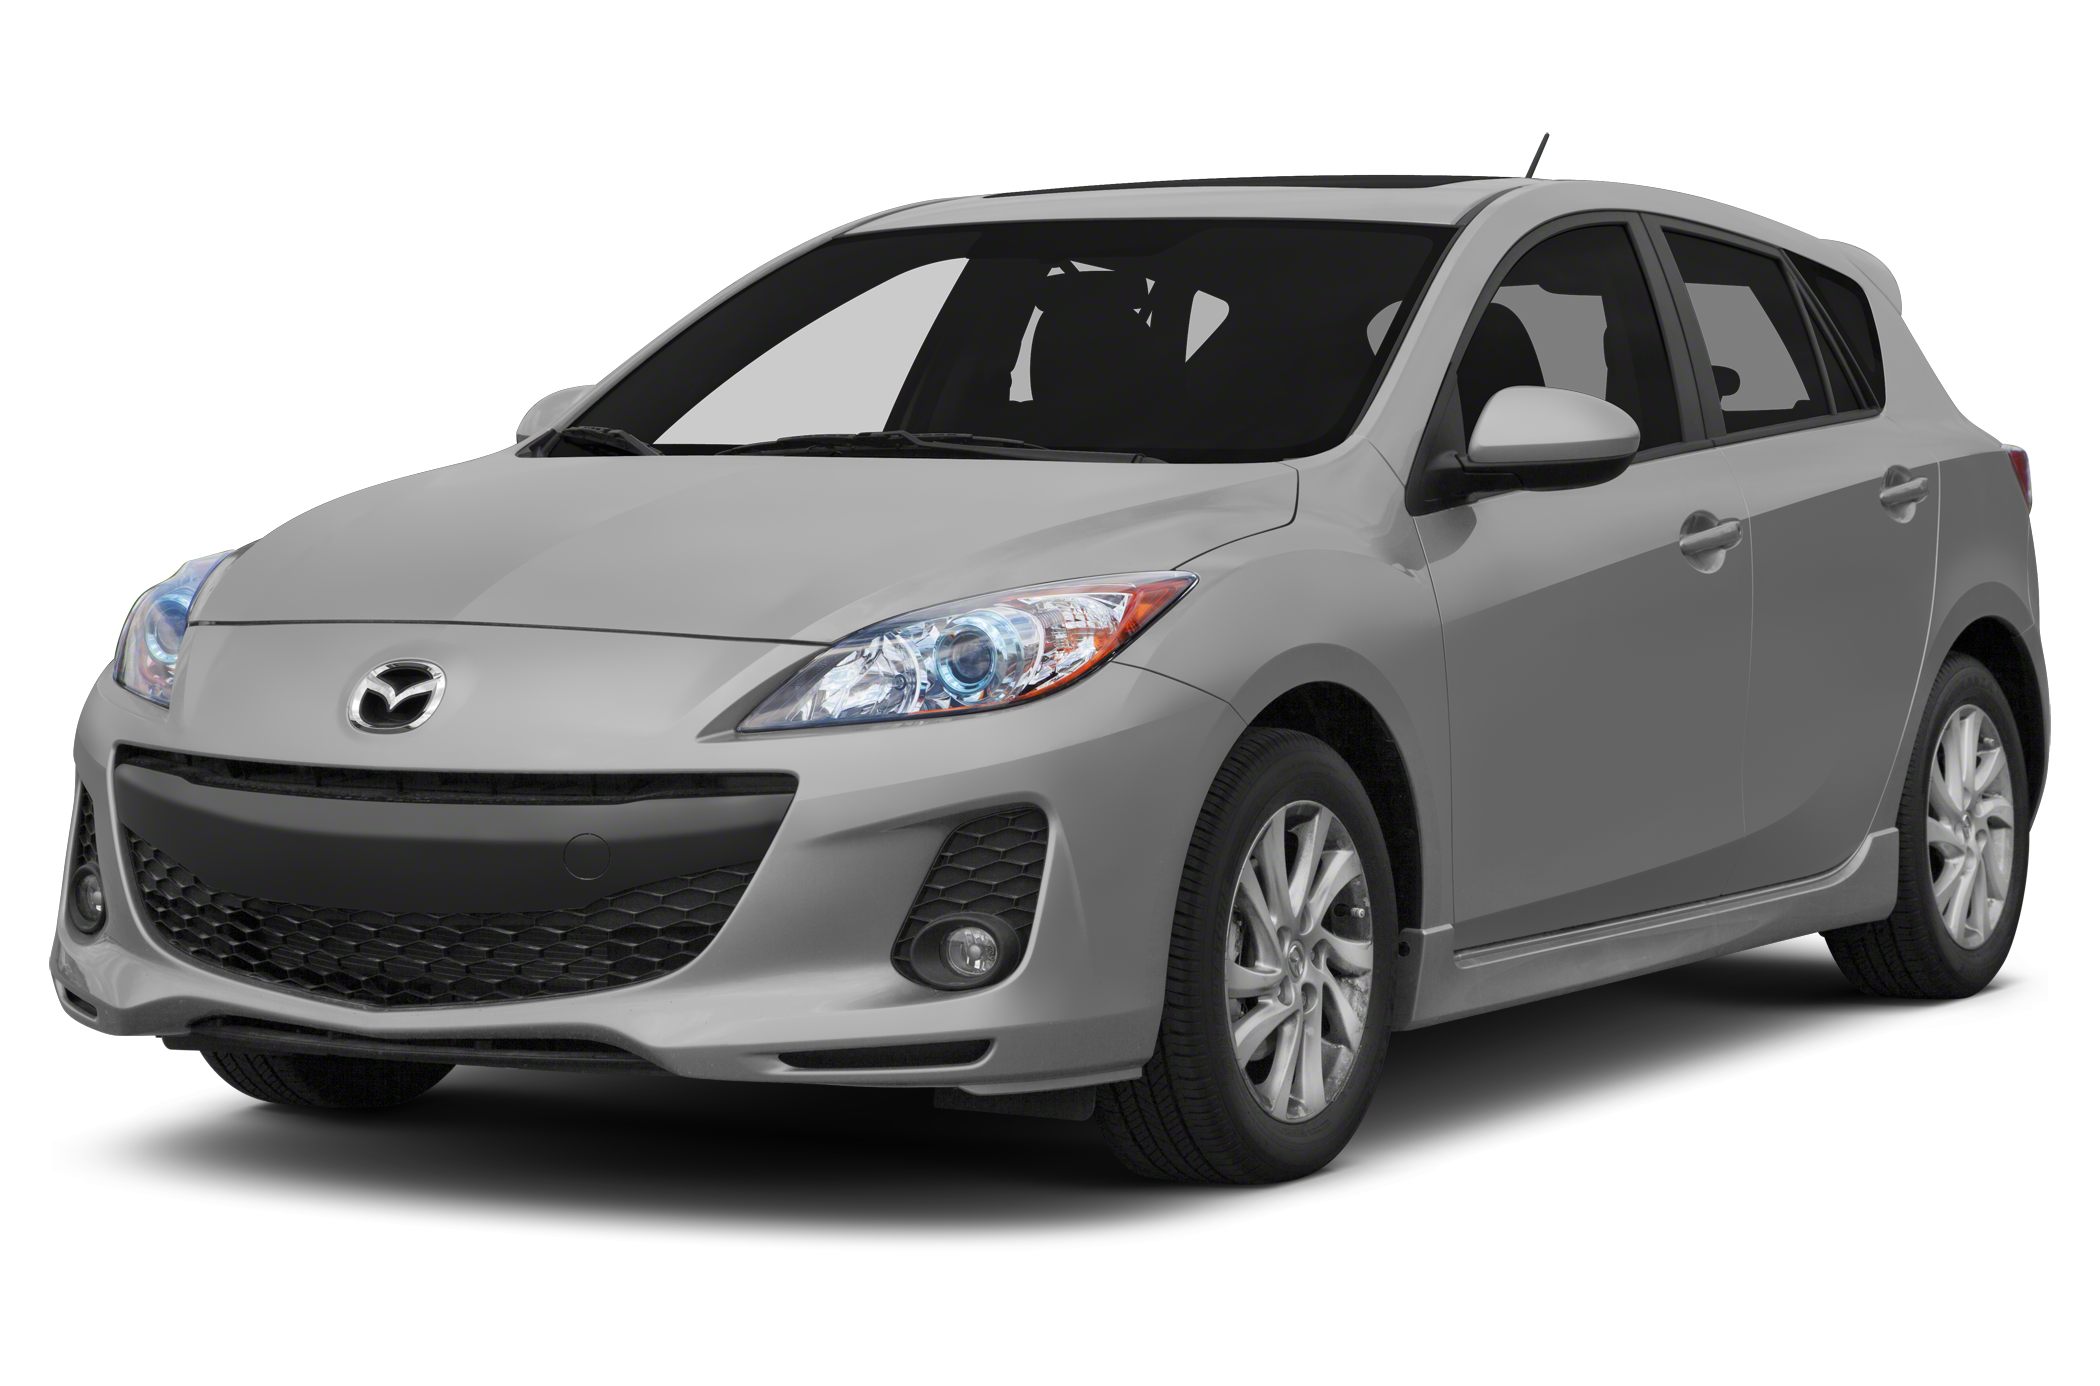 A Buyers Guide to the 2012 Mazda 3  YourMechanic Advice